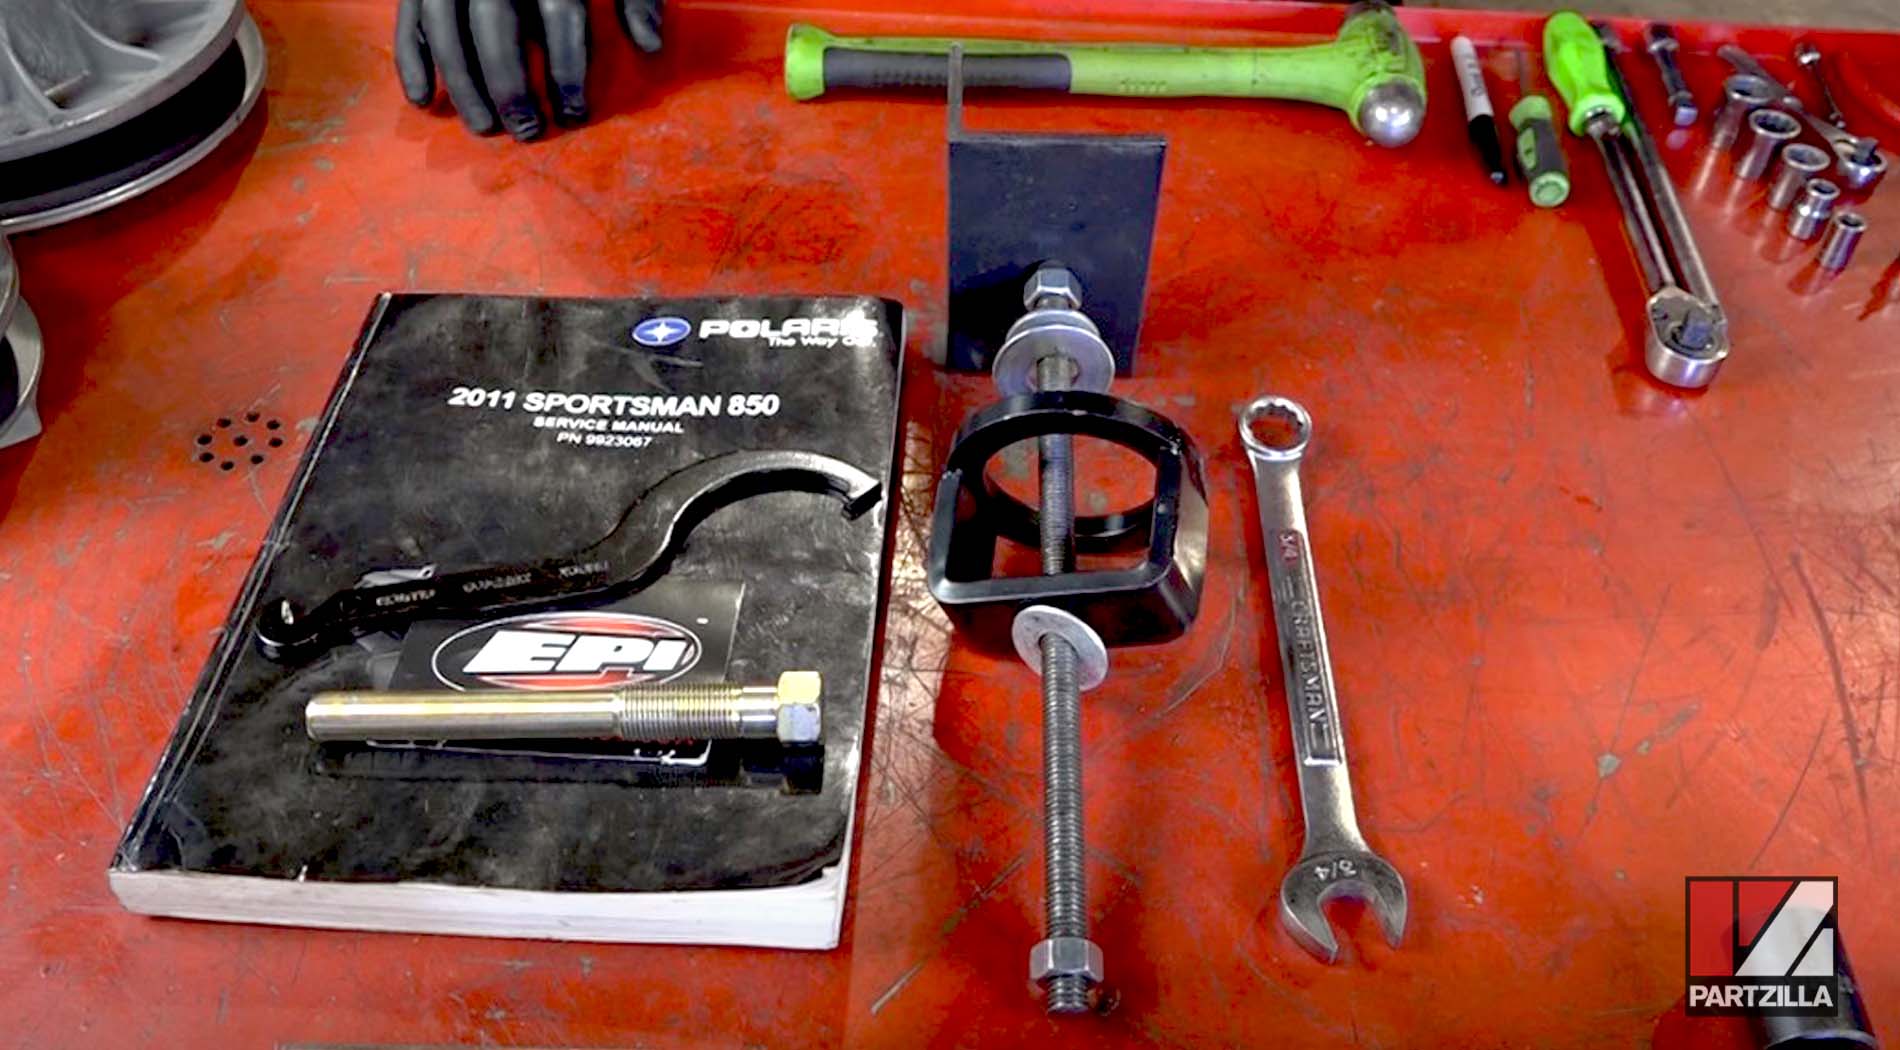 Polaris ATV Sportsman 850 clutch rebuild tools